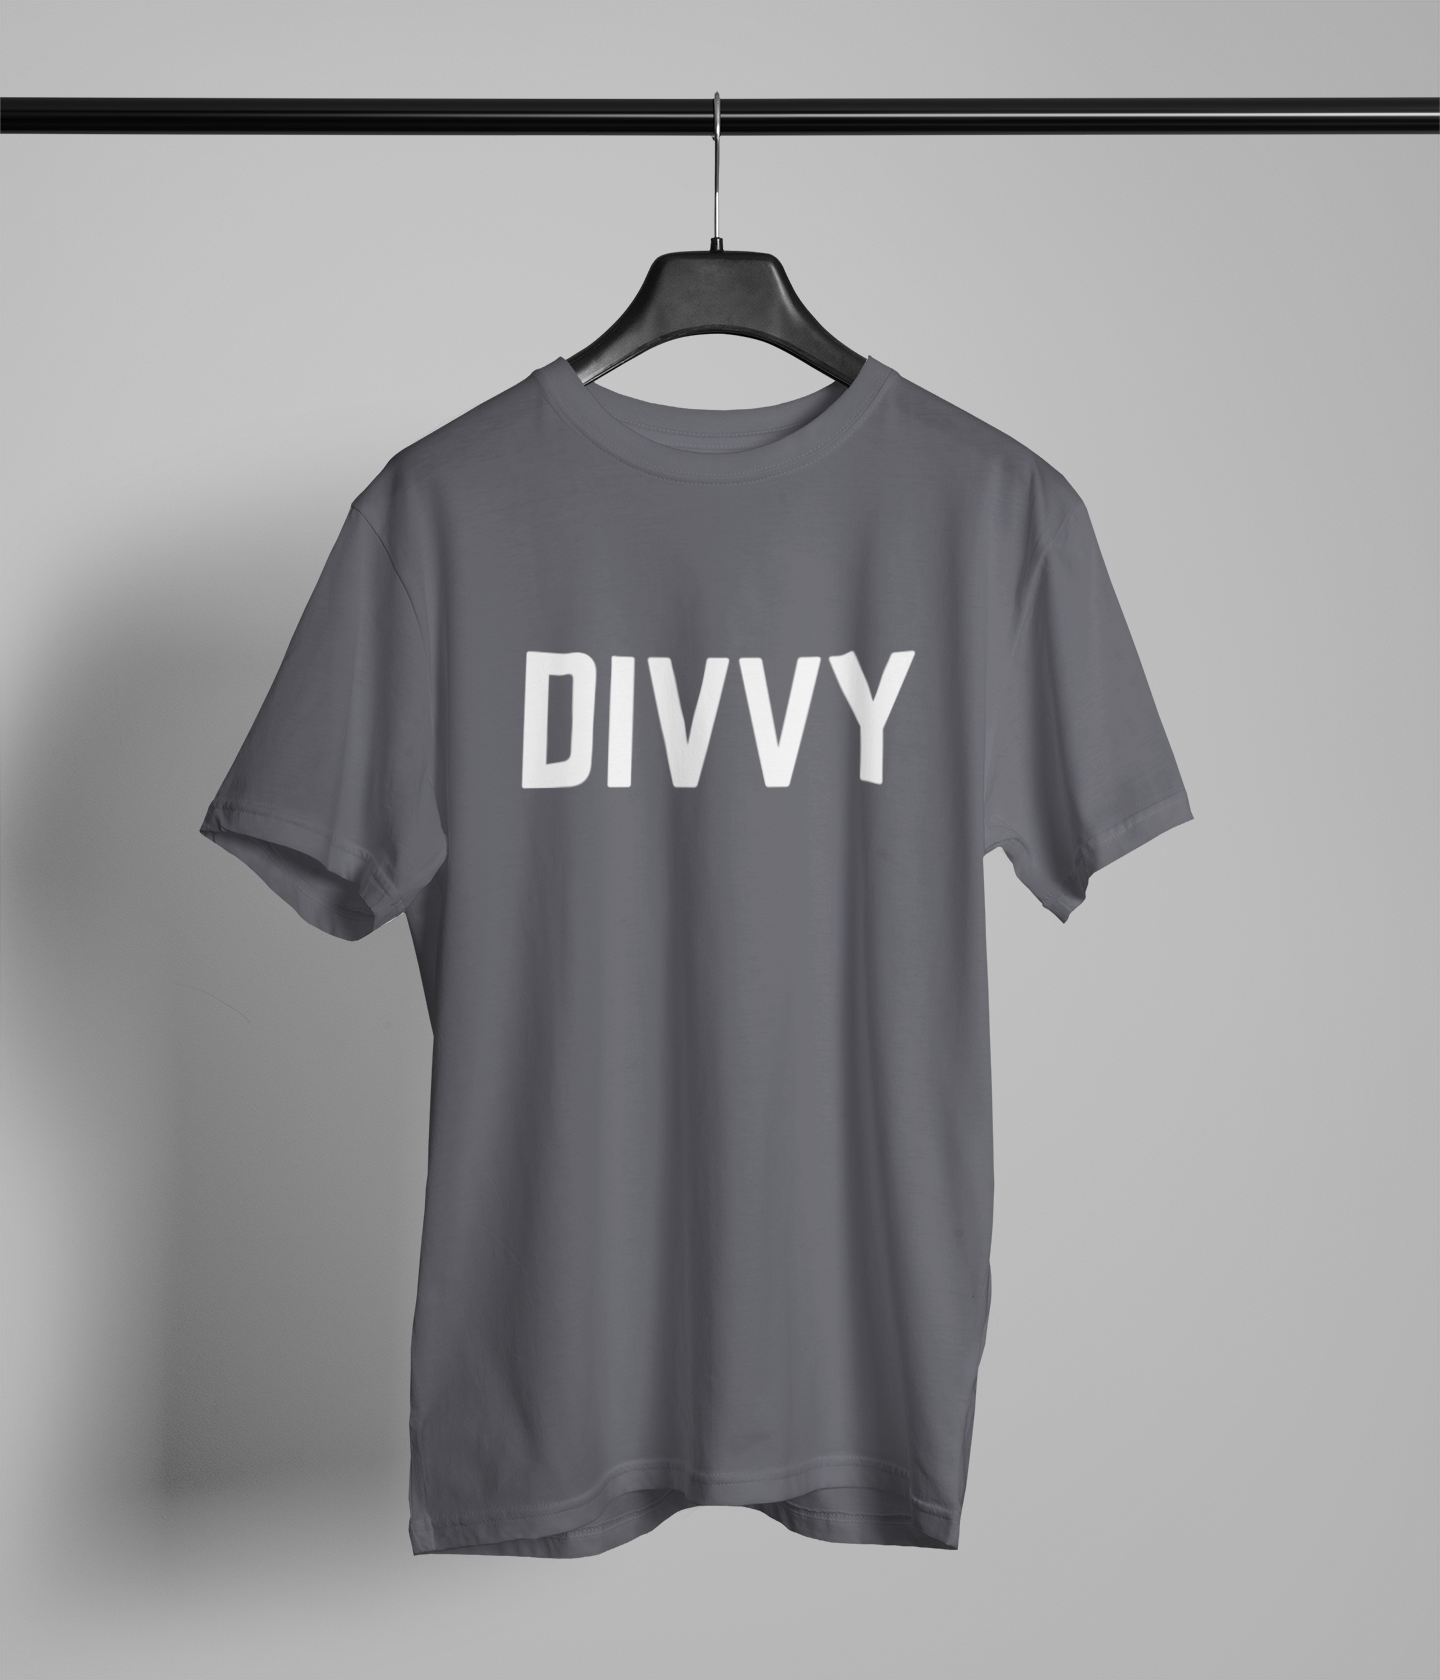 DIVVY Northern Slang T-Shirt Unisex